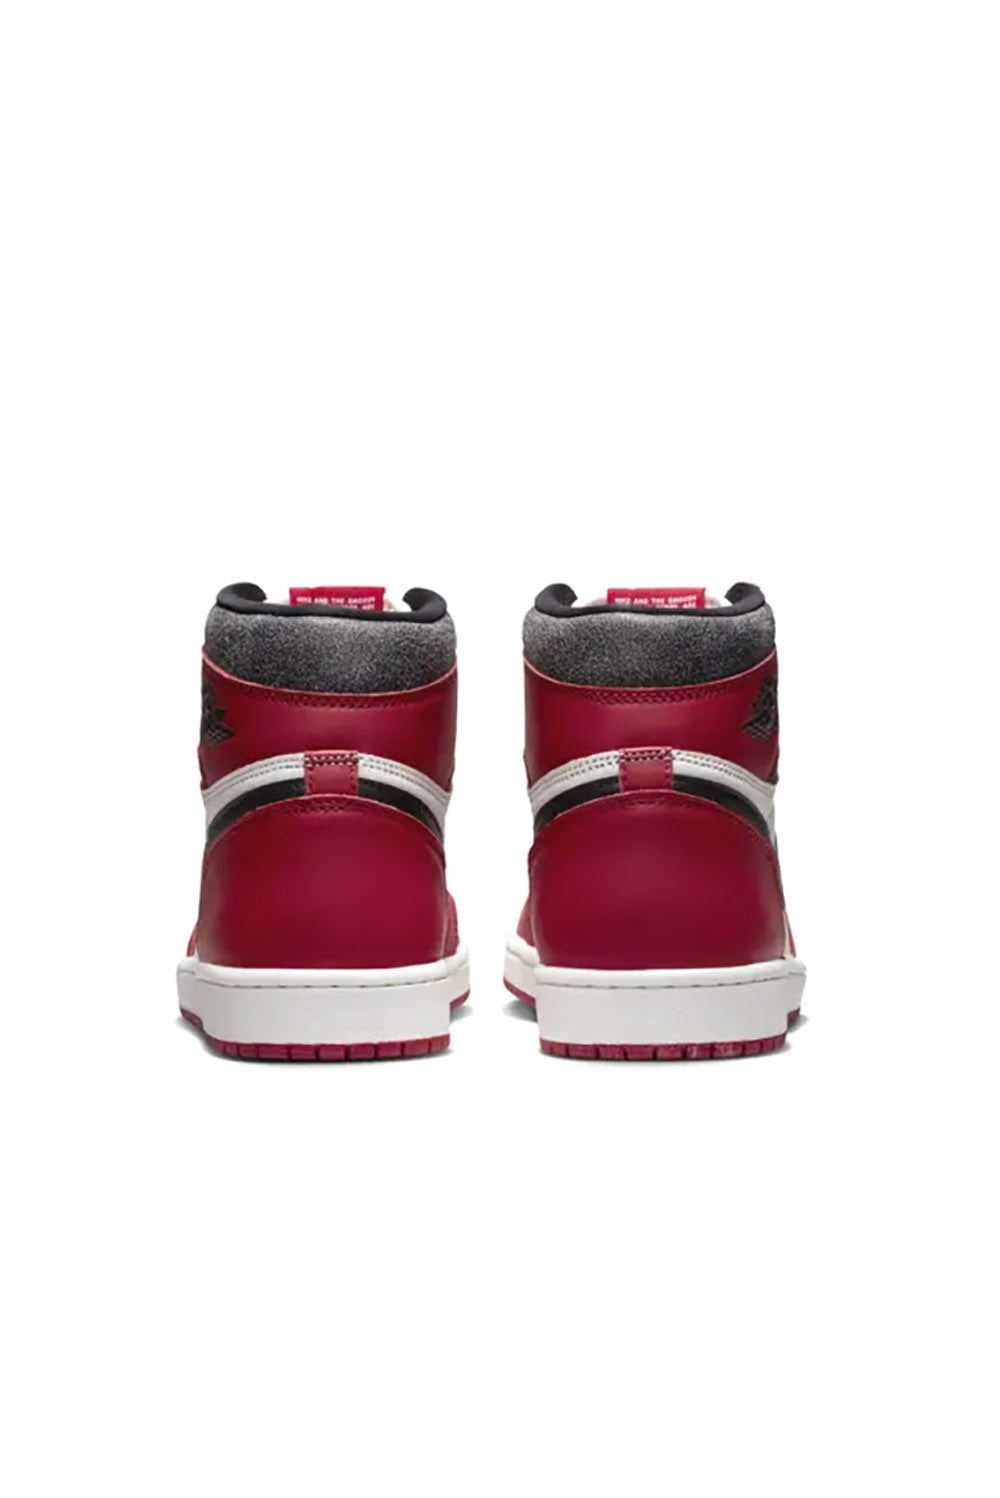  Nike Air Jordan 1 Retro High Rouge-voile-noir Uomo - 3